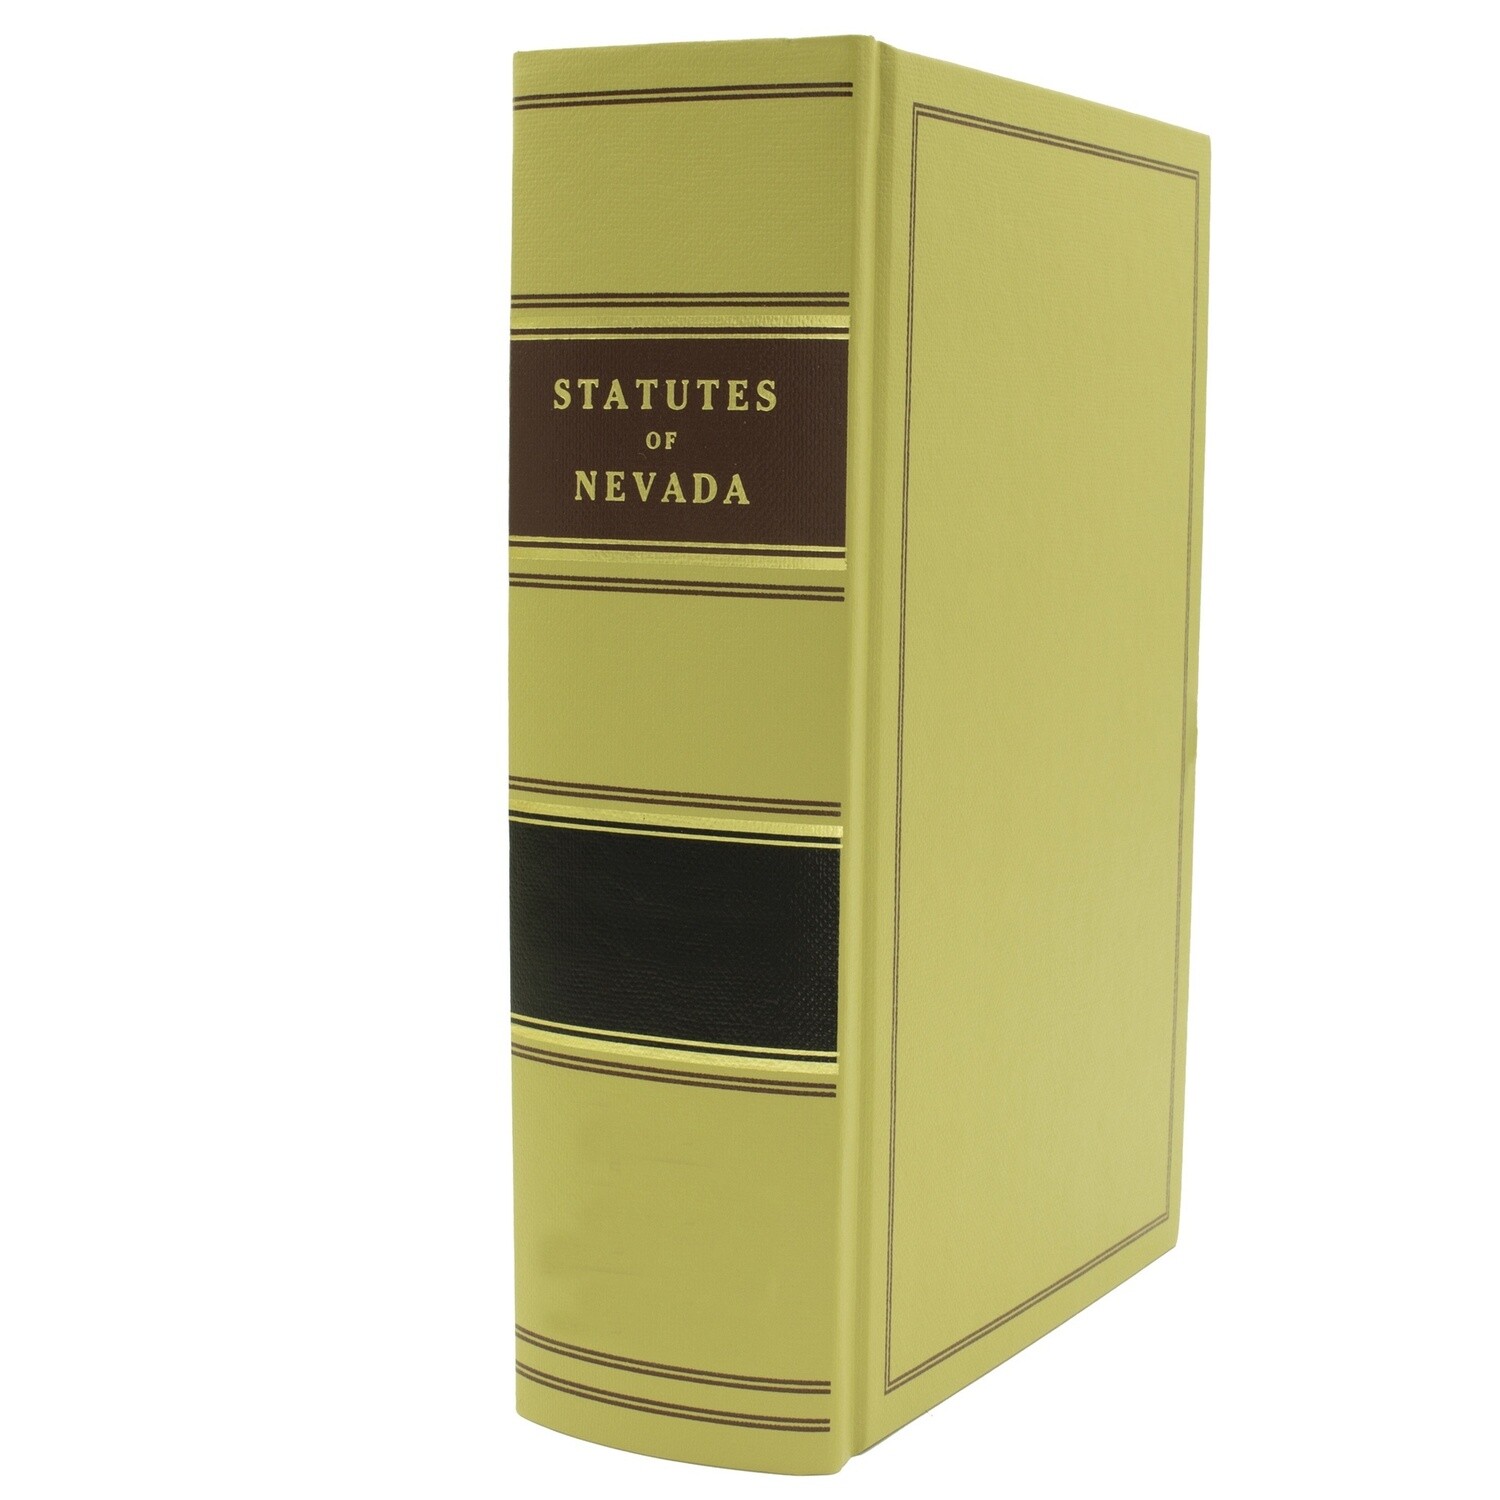 Statutes of Nevada - 1971 - 56th Session - 2 volume set